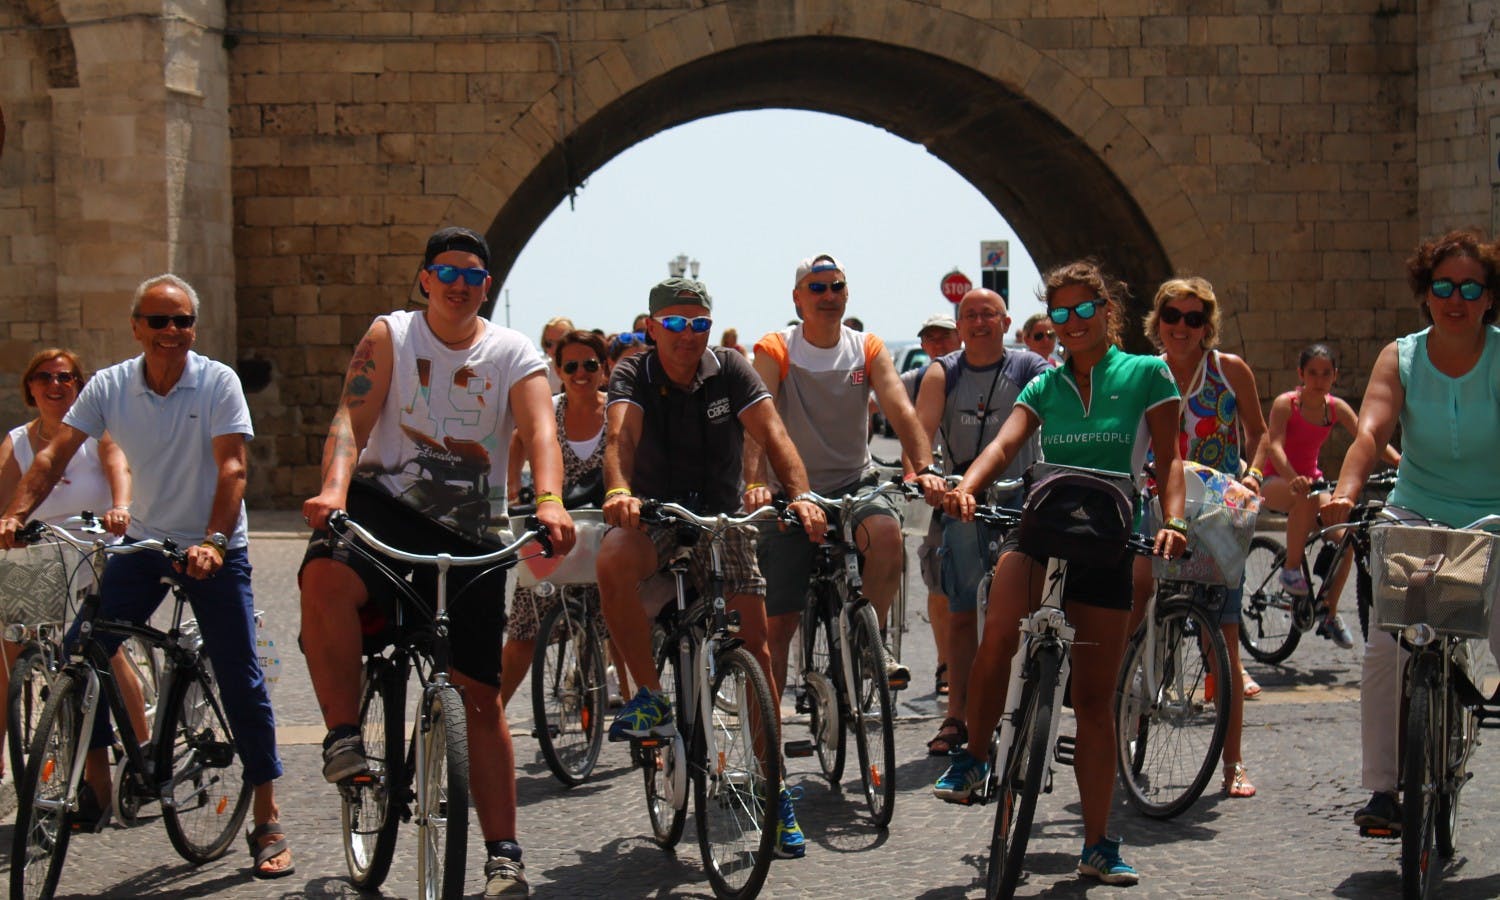 Bari bike tour. Musement